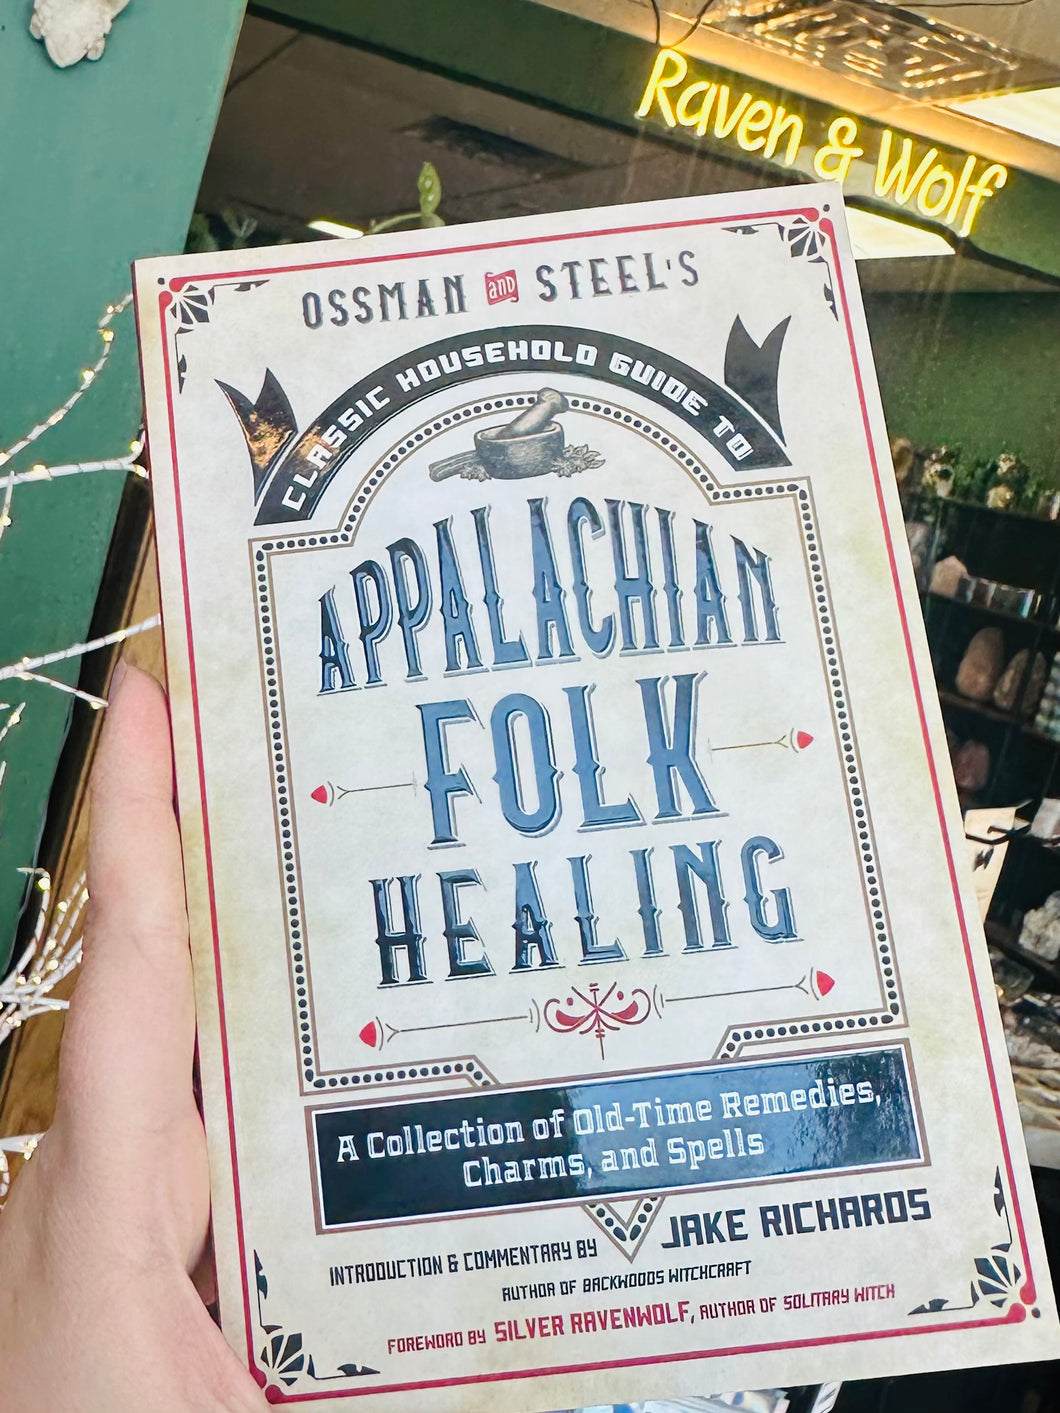 Appalachian folk healing book